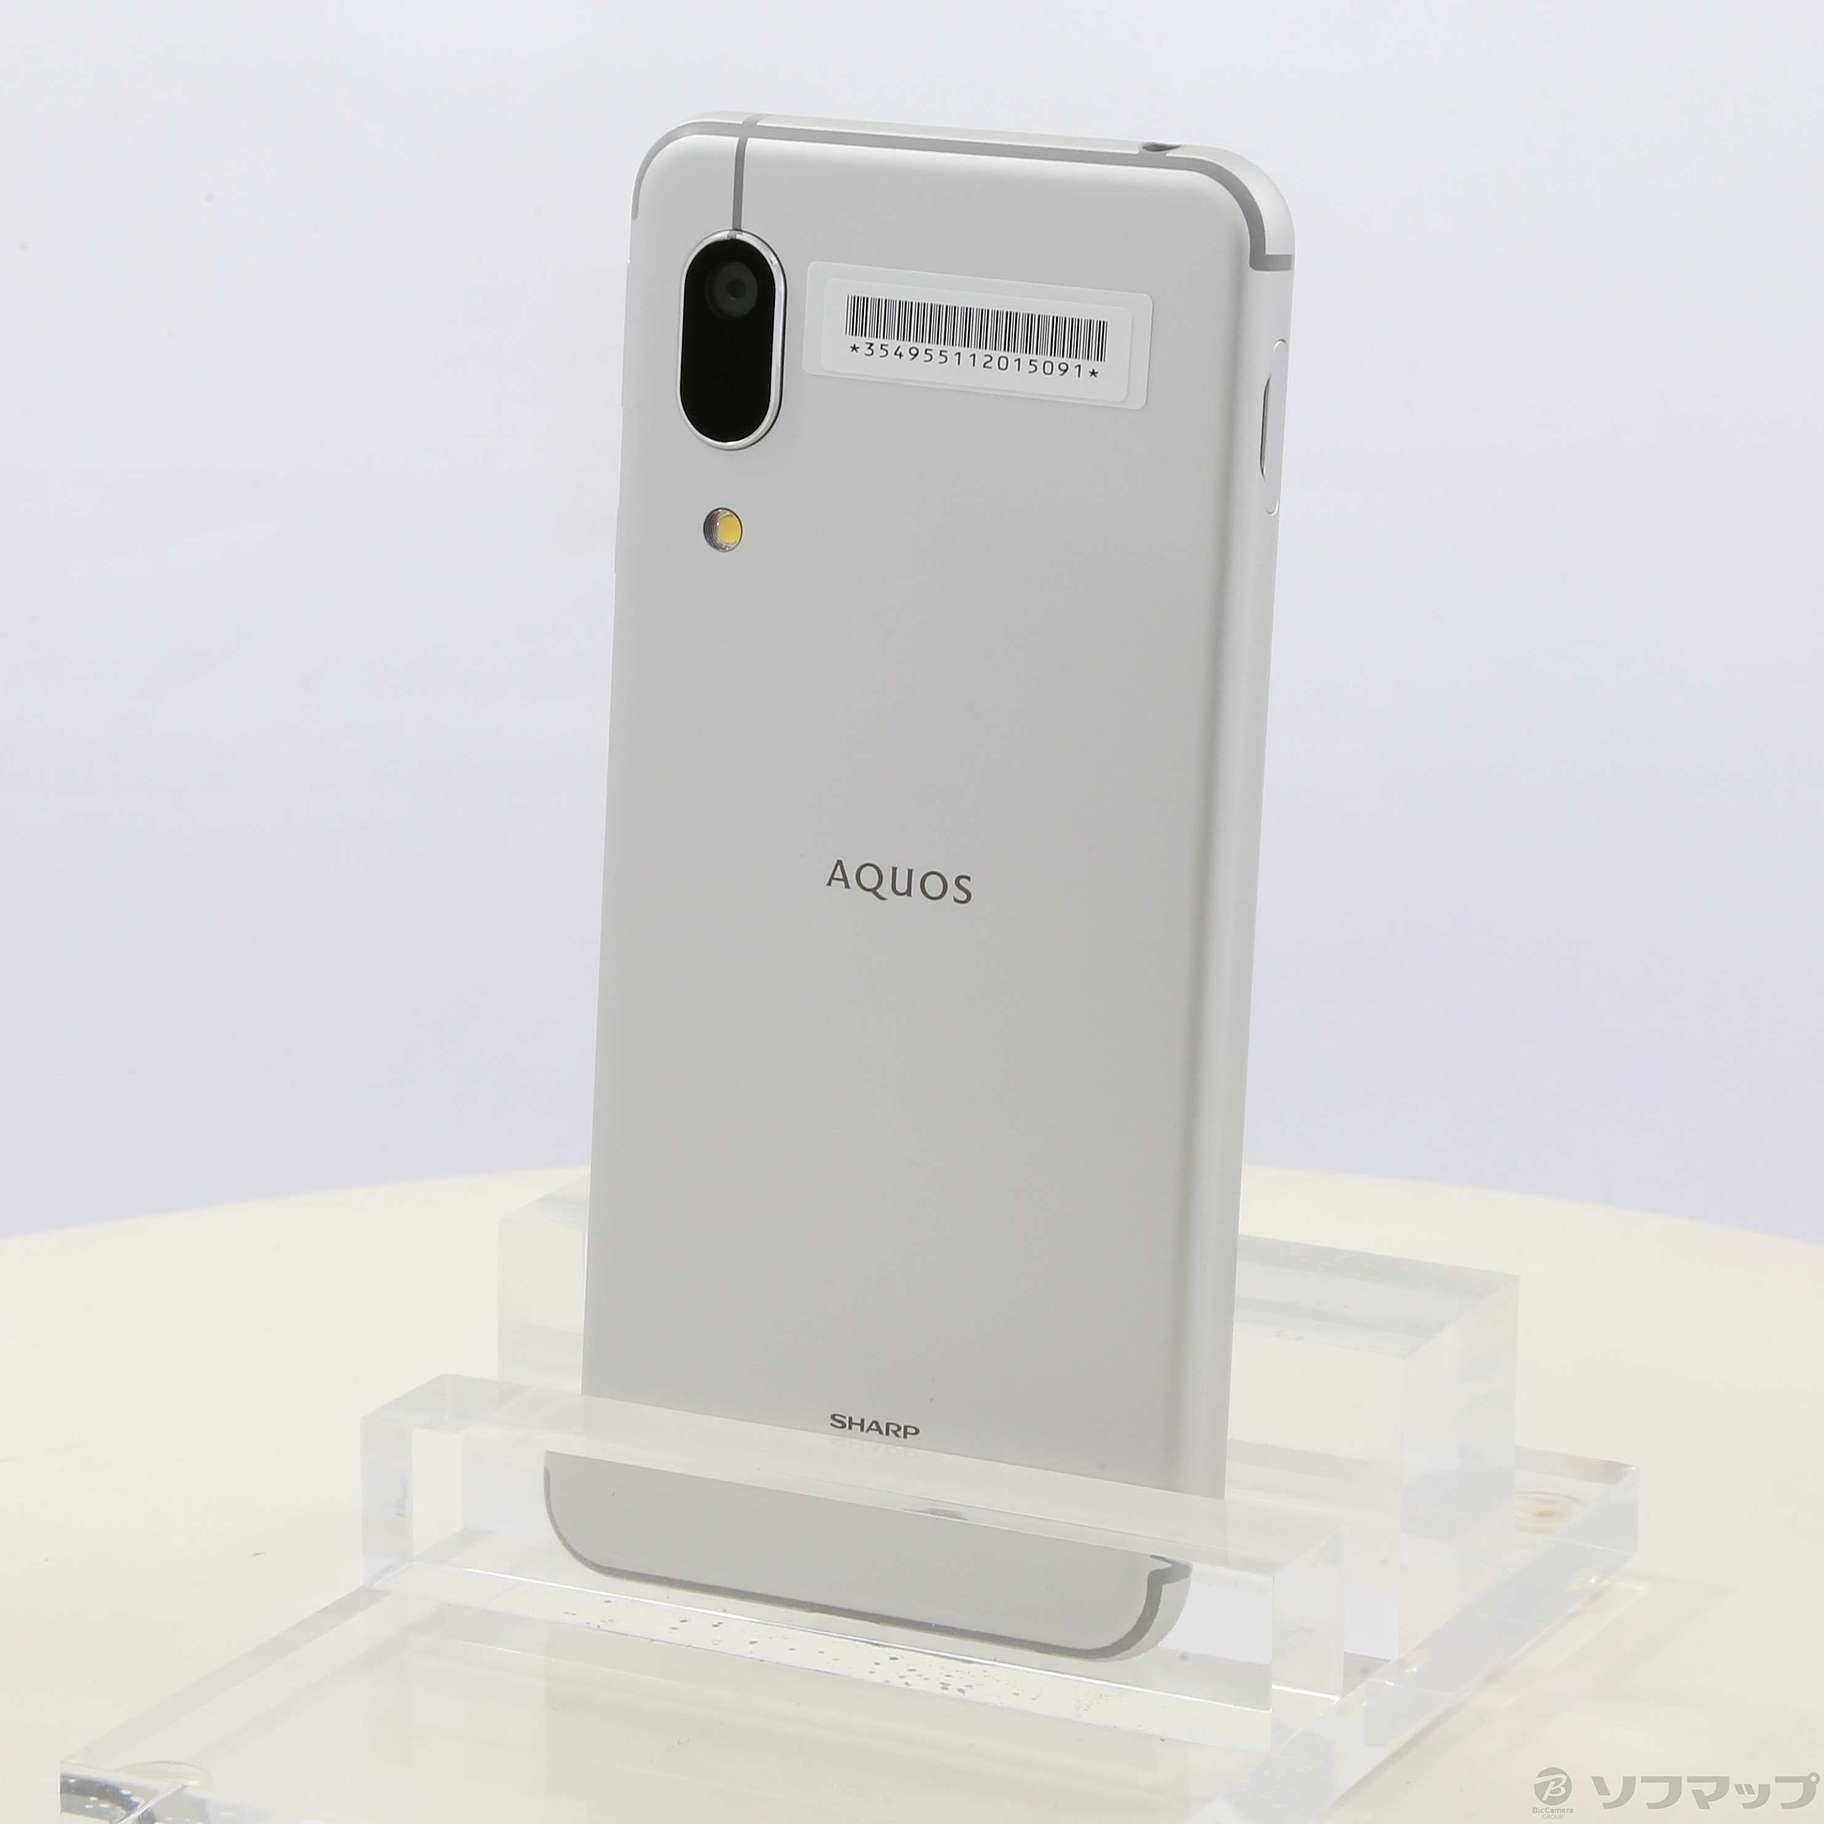 AQUOS sense3 basic シルバー 32 GB SIMフリースマートフォン本体